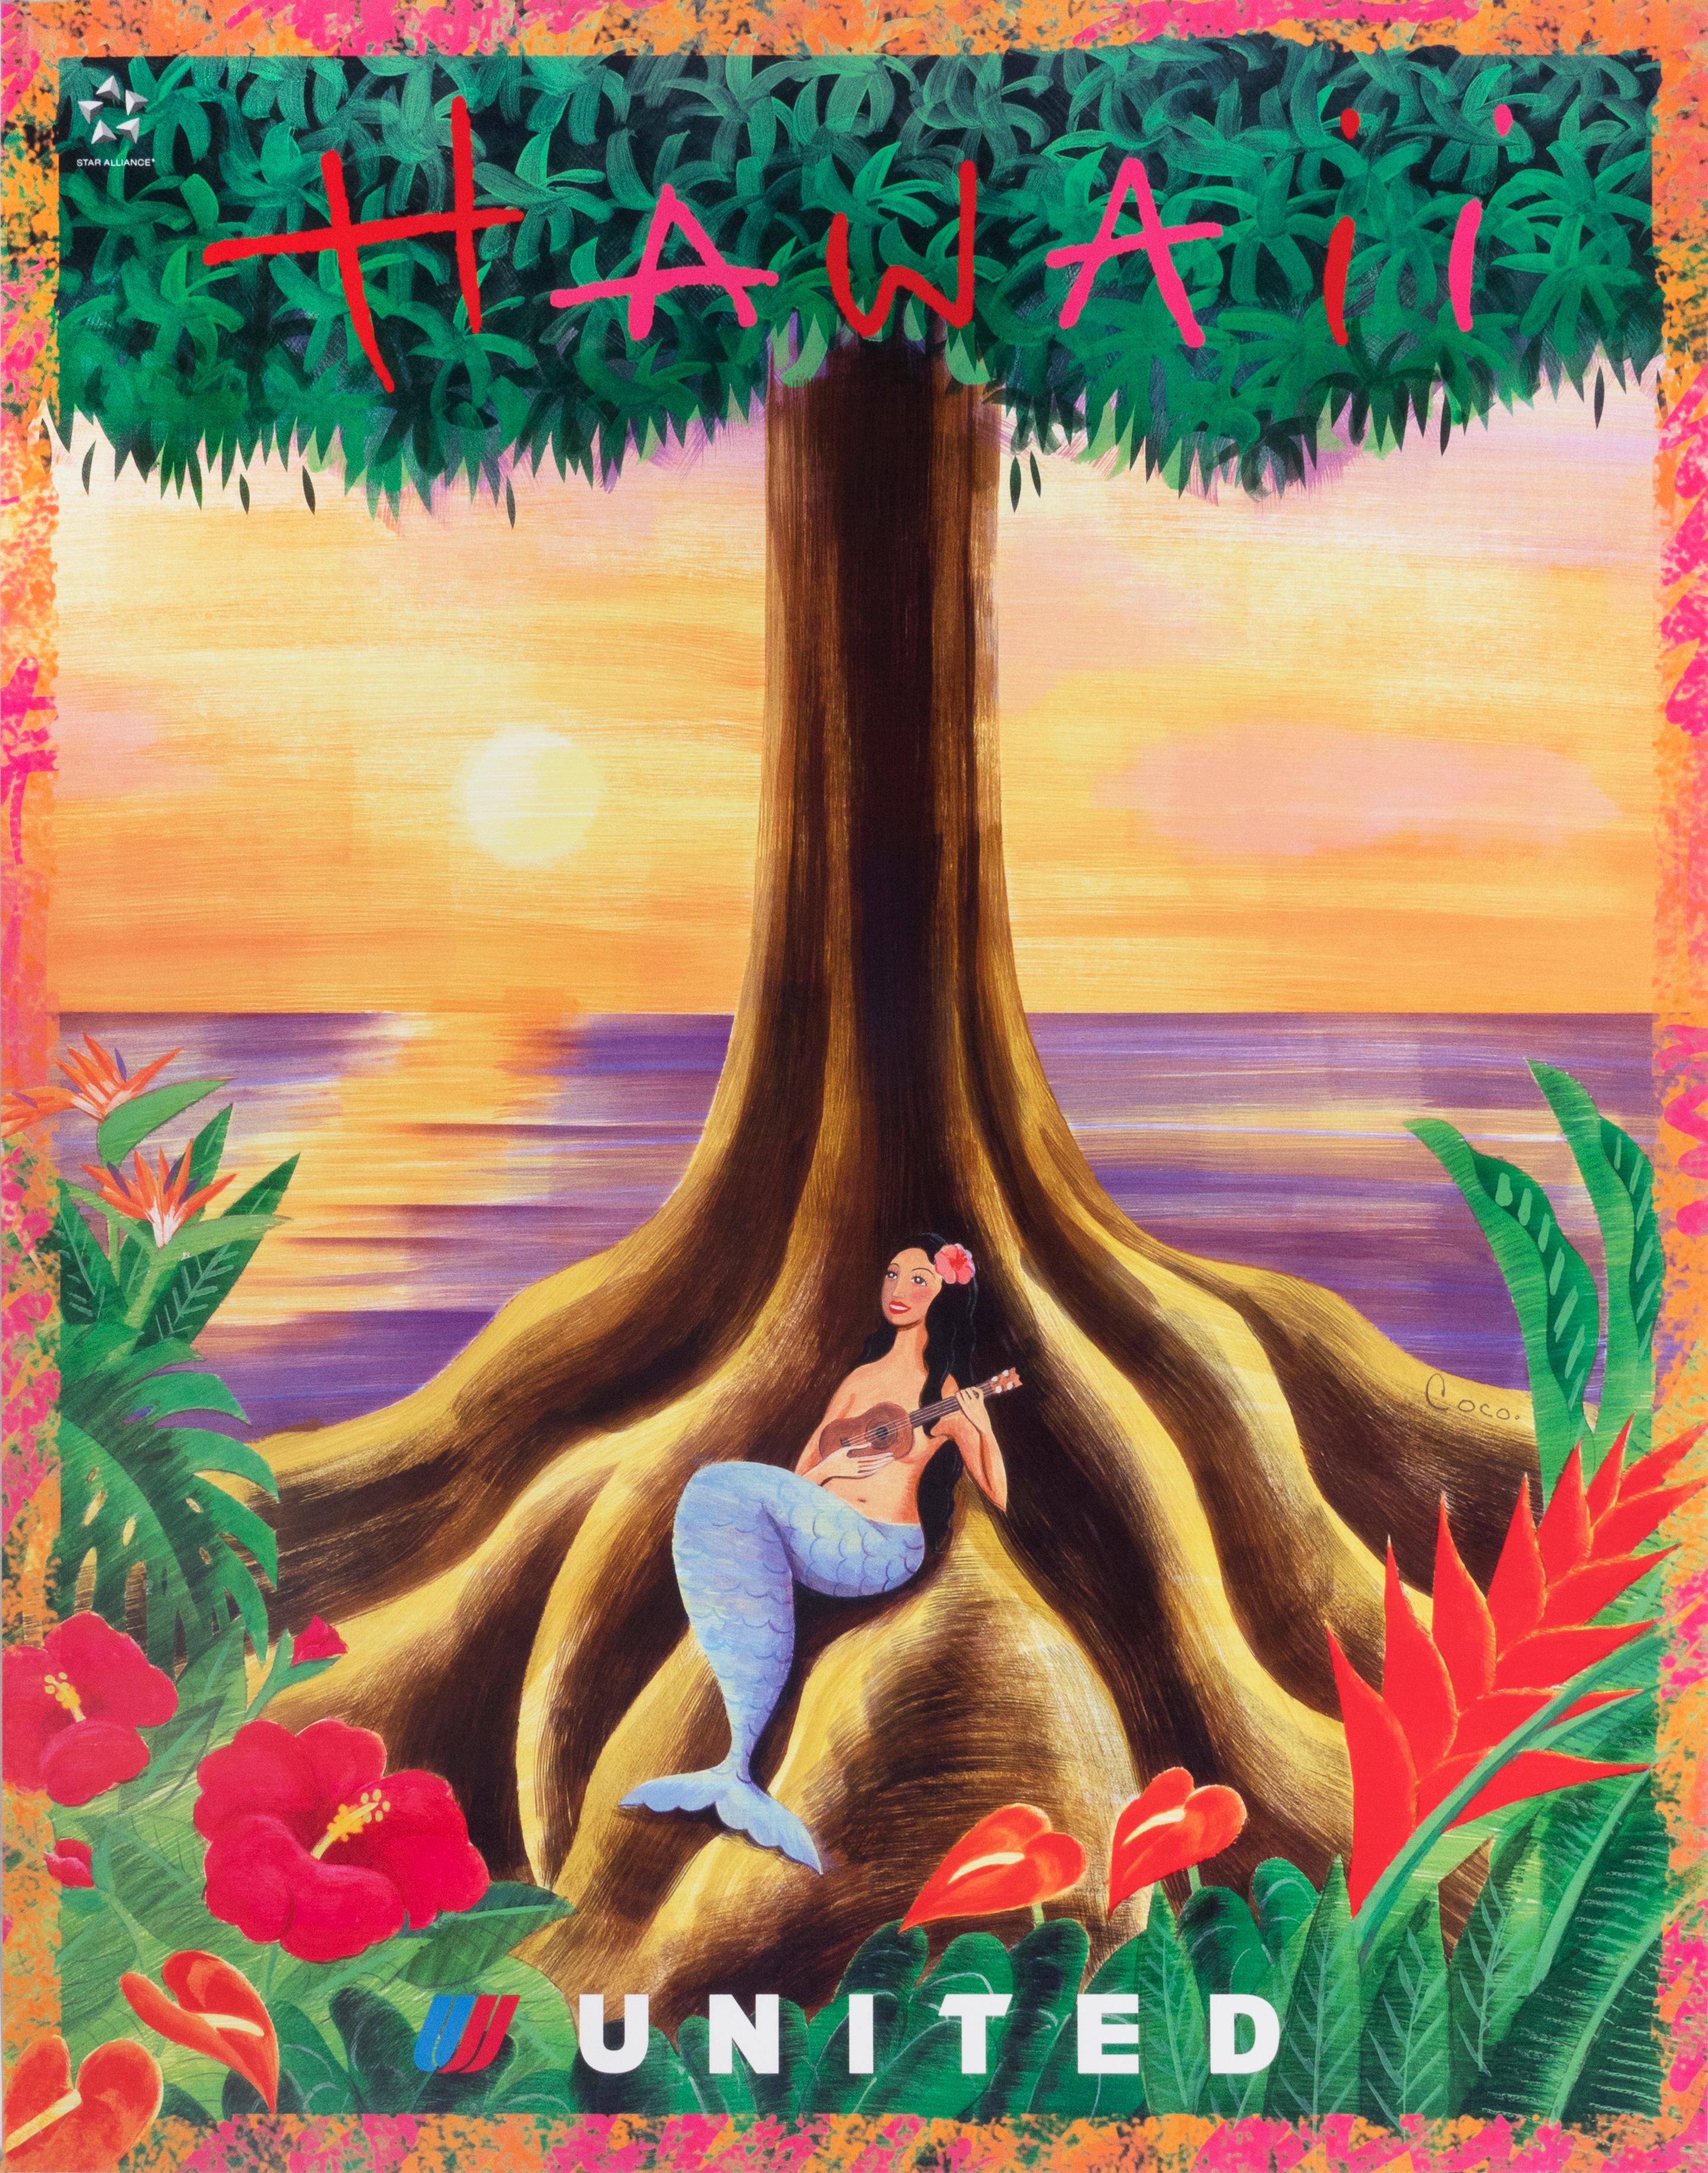 Coco Masuda Landscape Print - "Hawaii - United Airlines" Travel Beach Original Poster